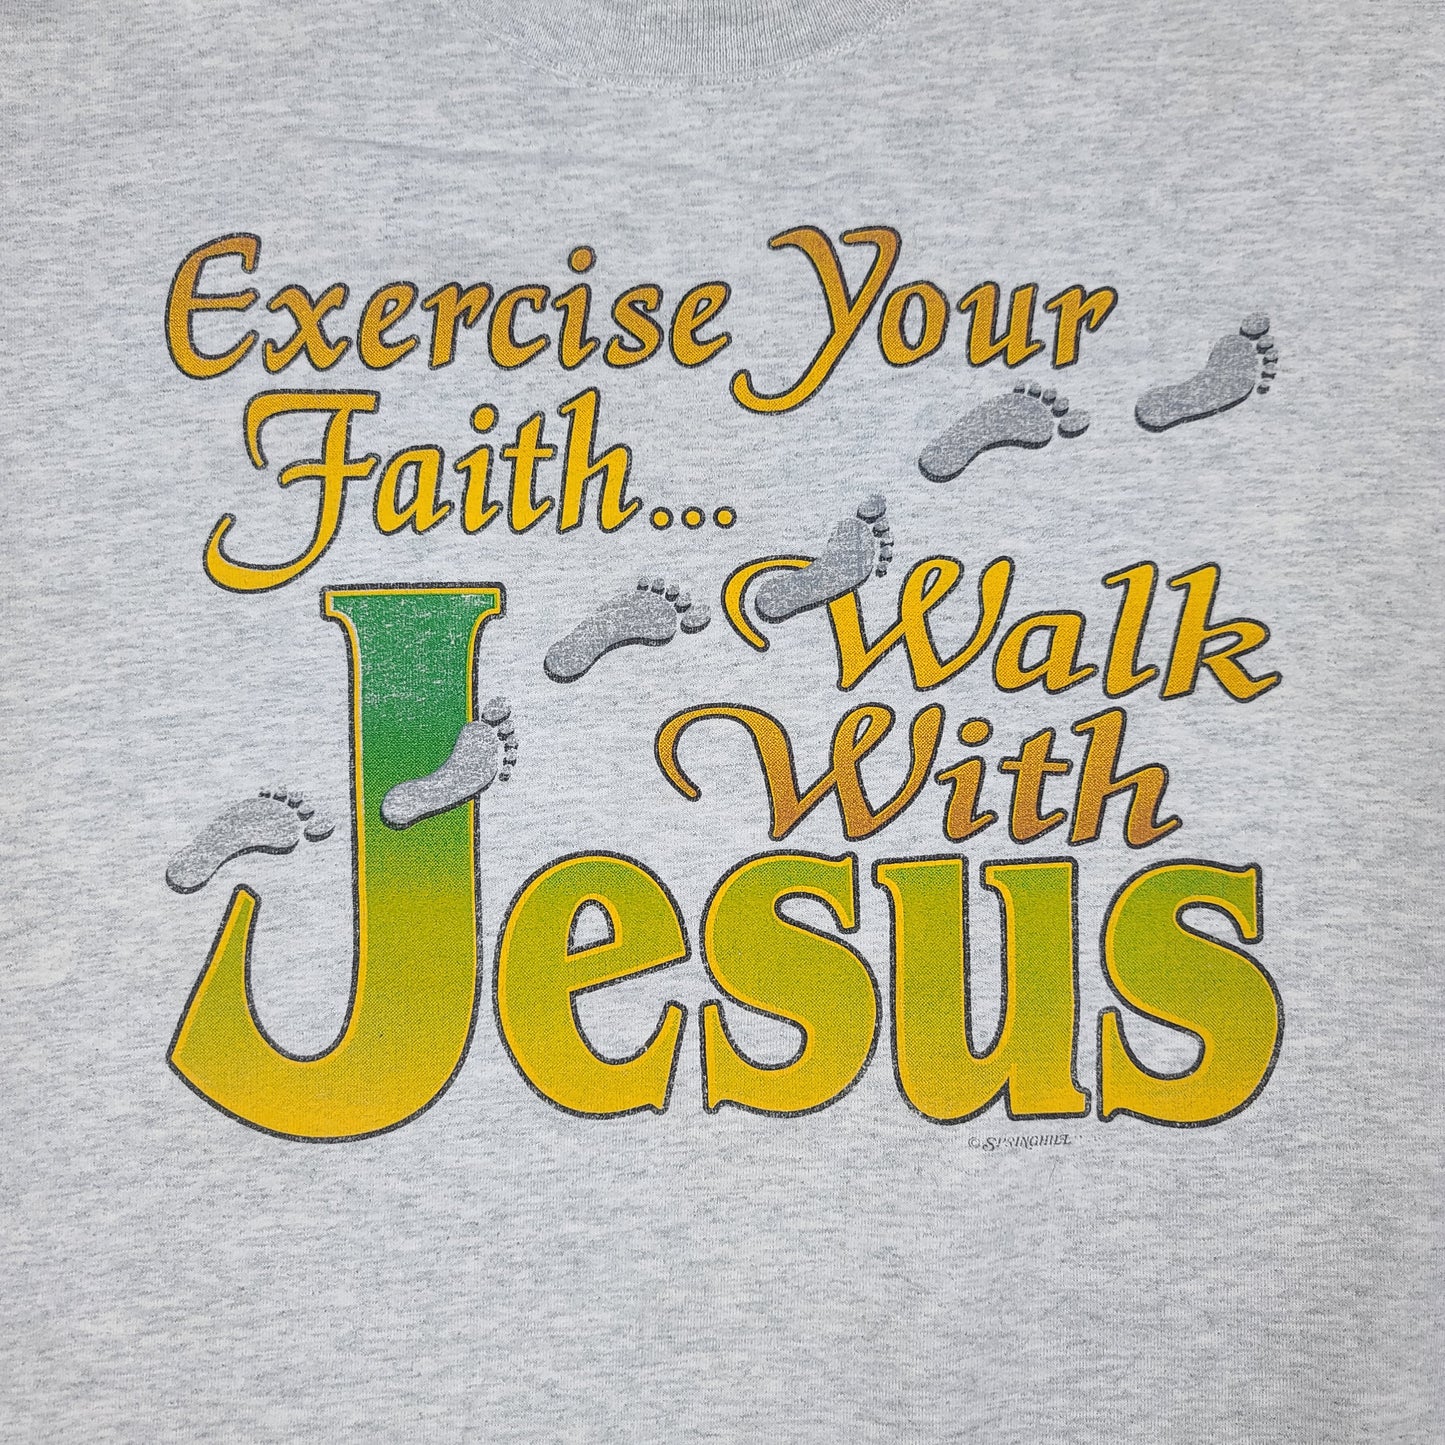 Vintage Exercise Your Faith Walk With Jesus Gray Sweatshirt